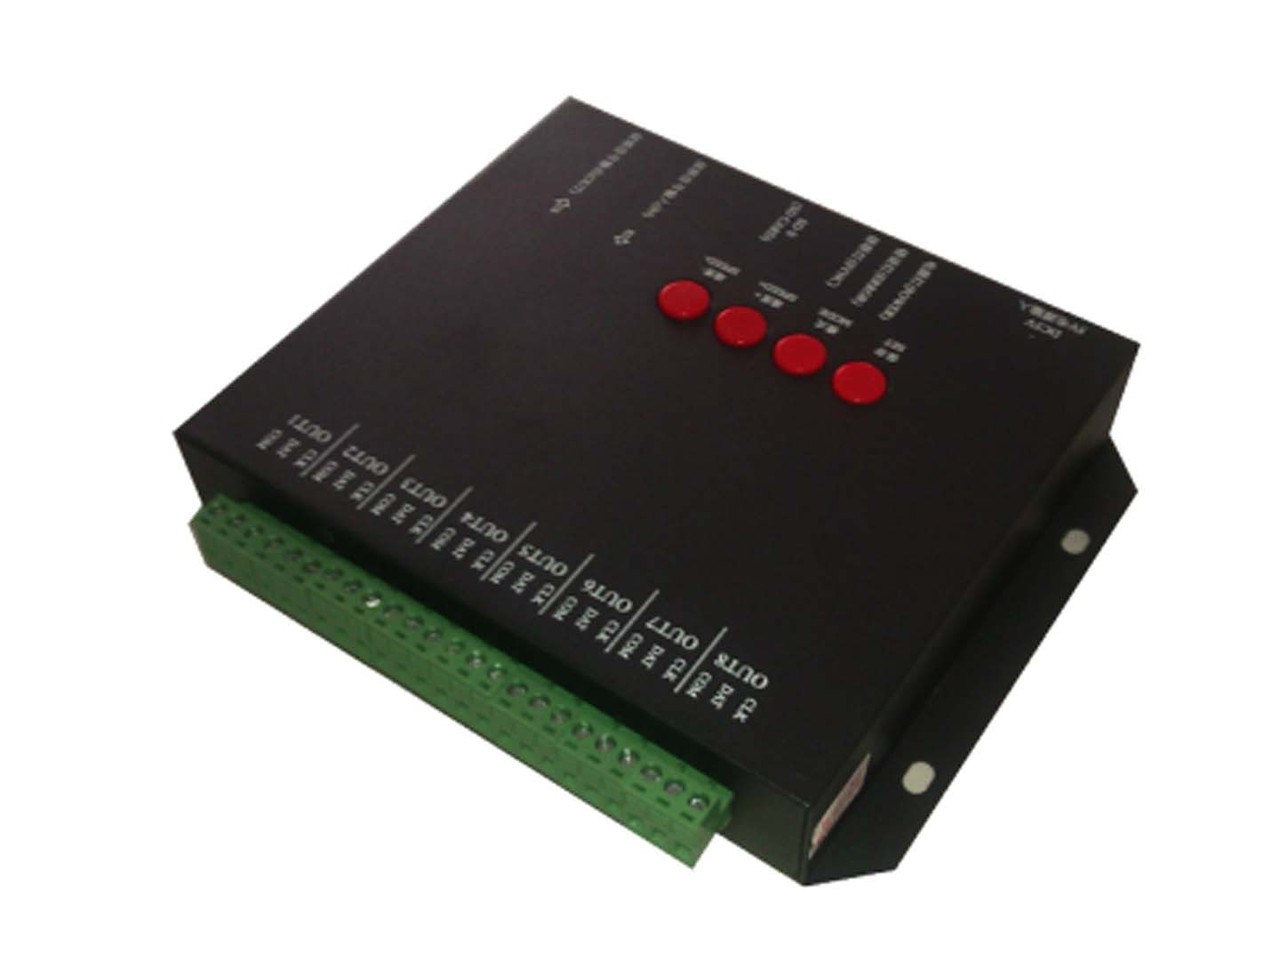 DMX-512-8 Controller – DMX-512-8 Controller for the Cine-Flood LED